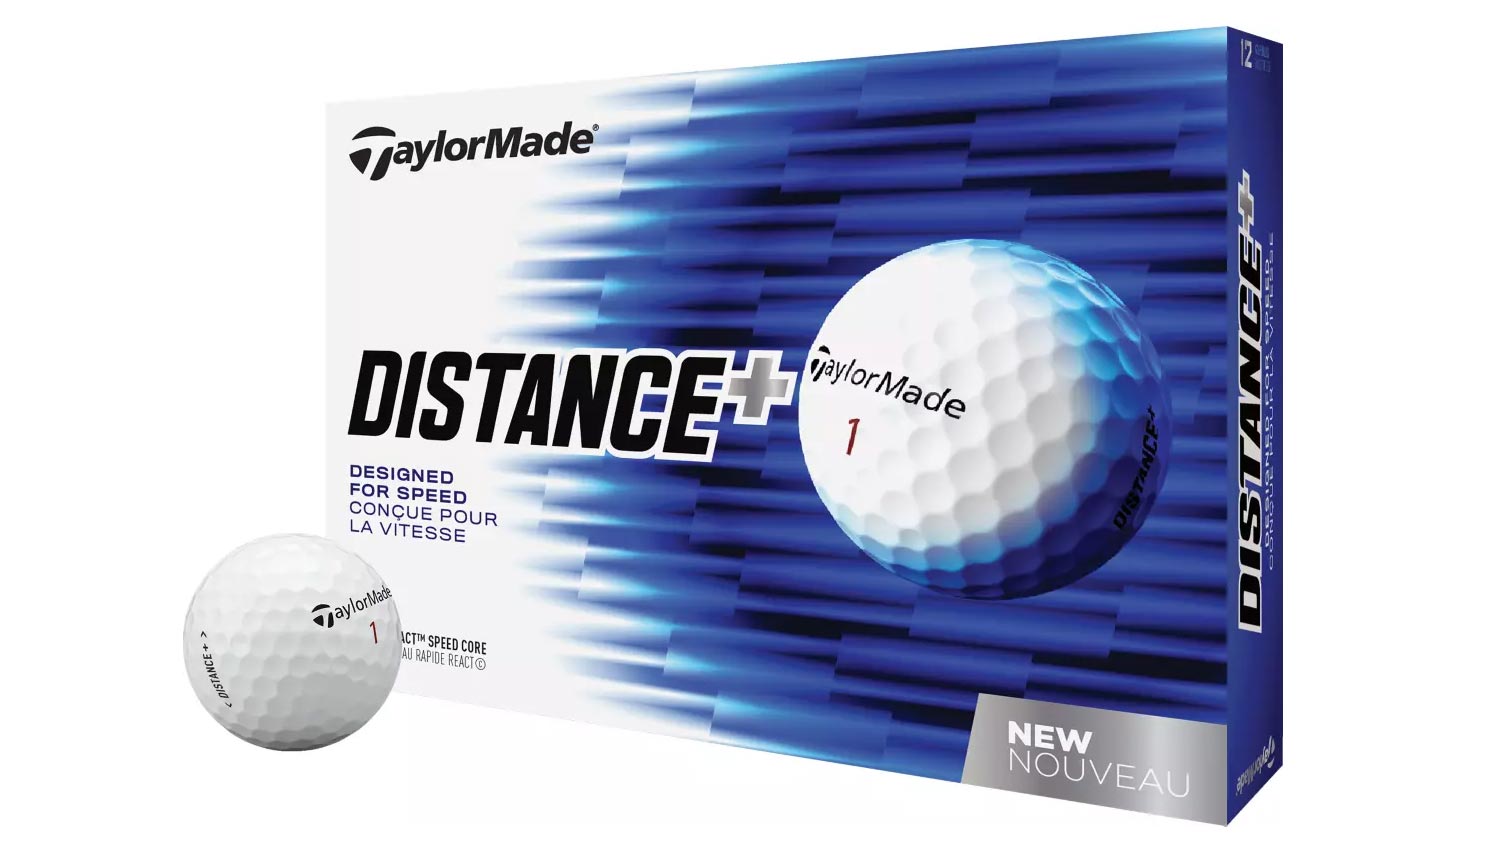 13 best value golf balls to improve distance, feel Golf Ball Buyer's Guide